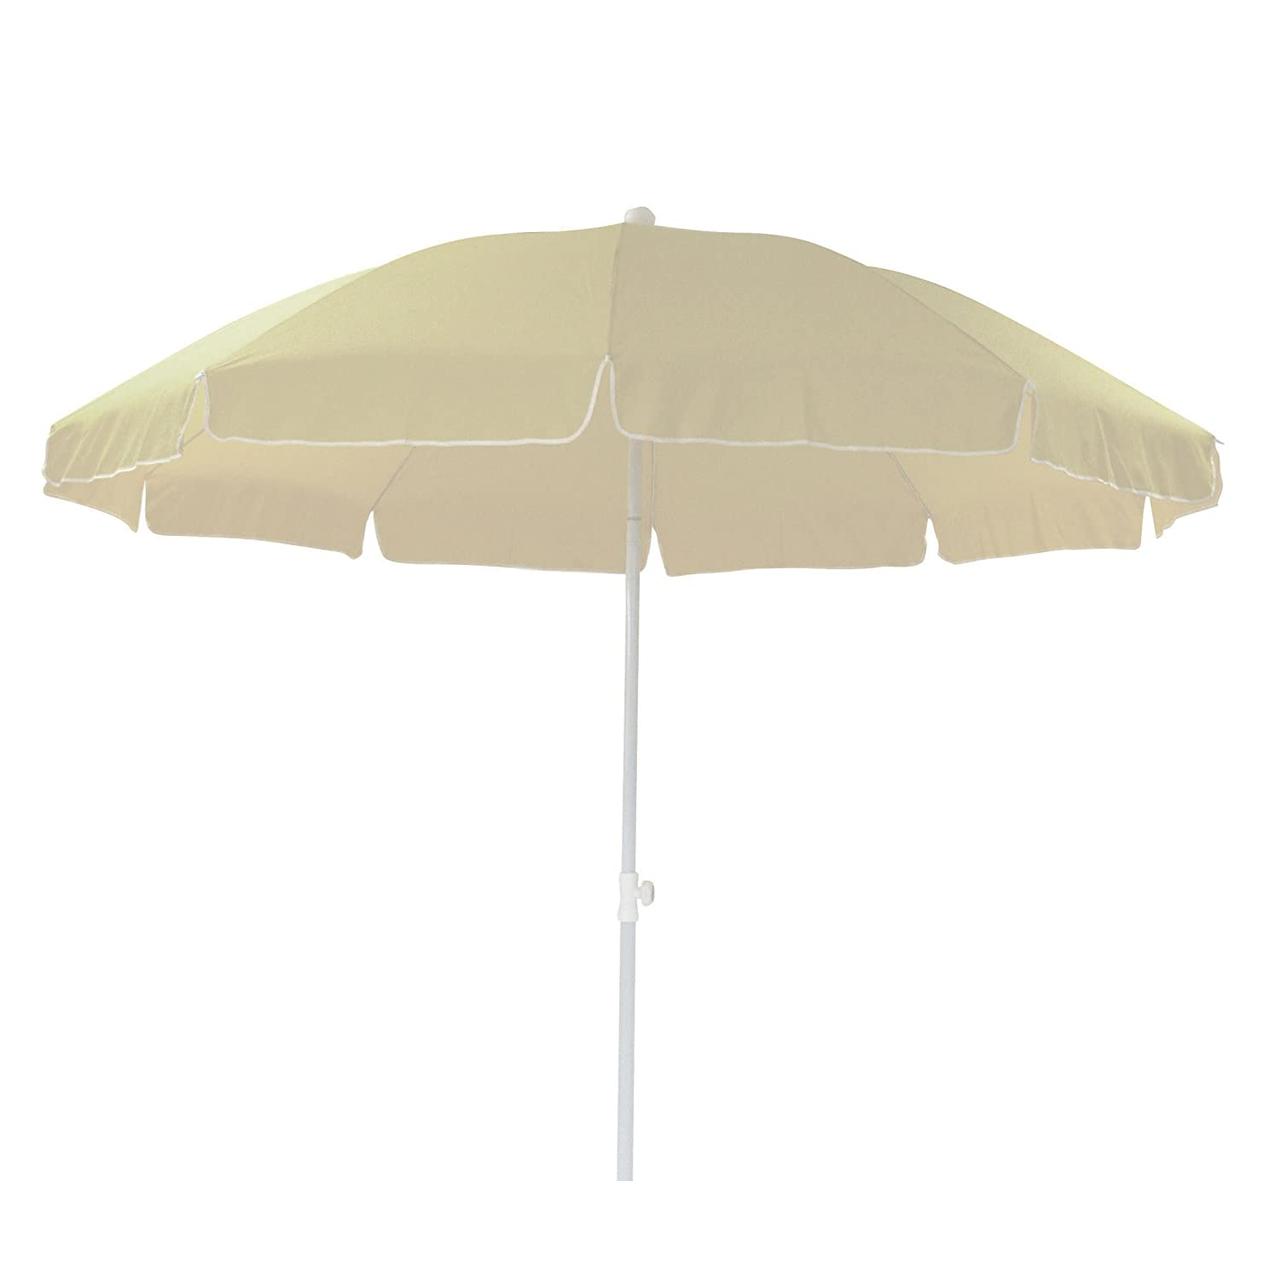 Зонт садовый Terrassenschirm 240/10 beige, Poly